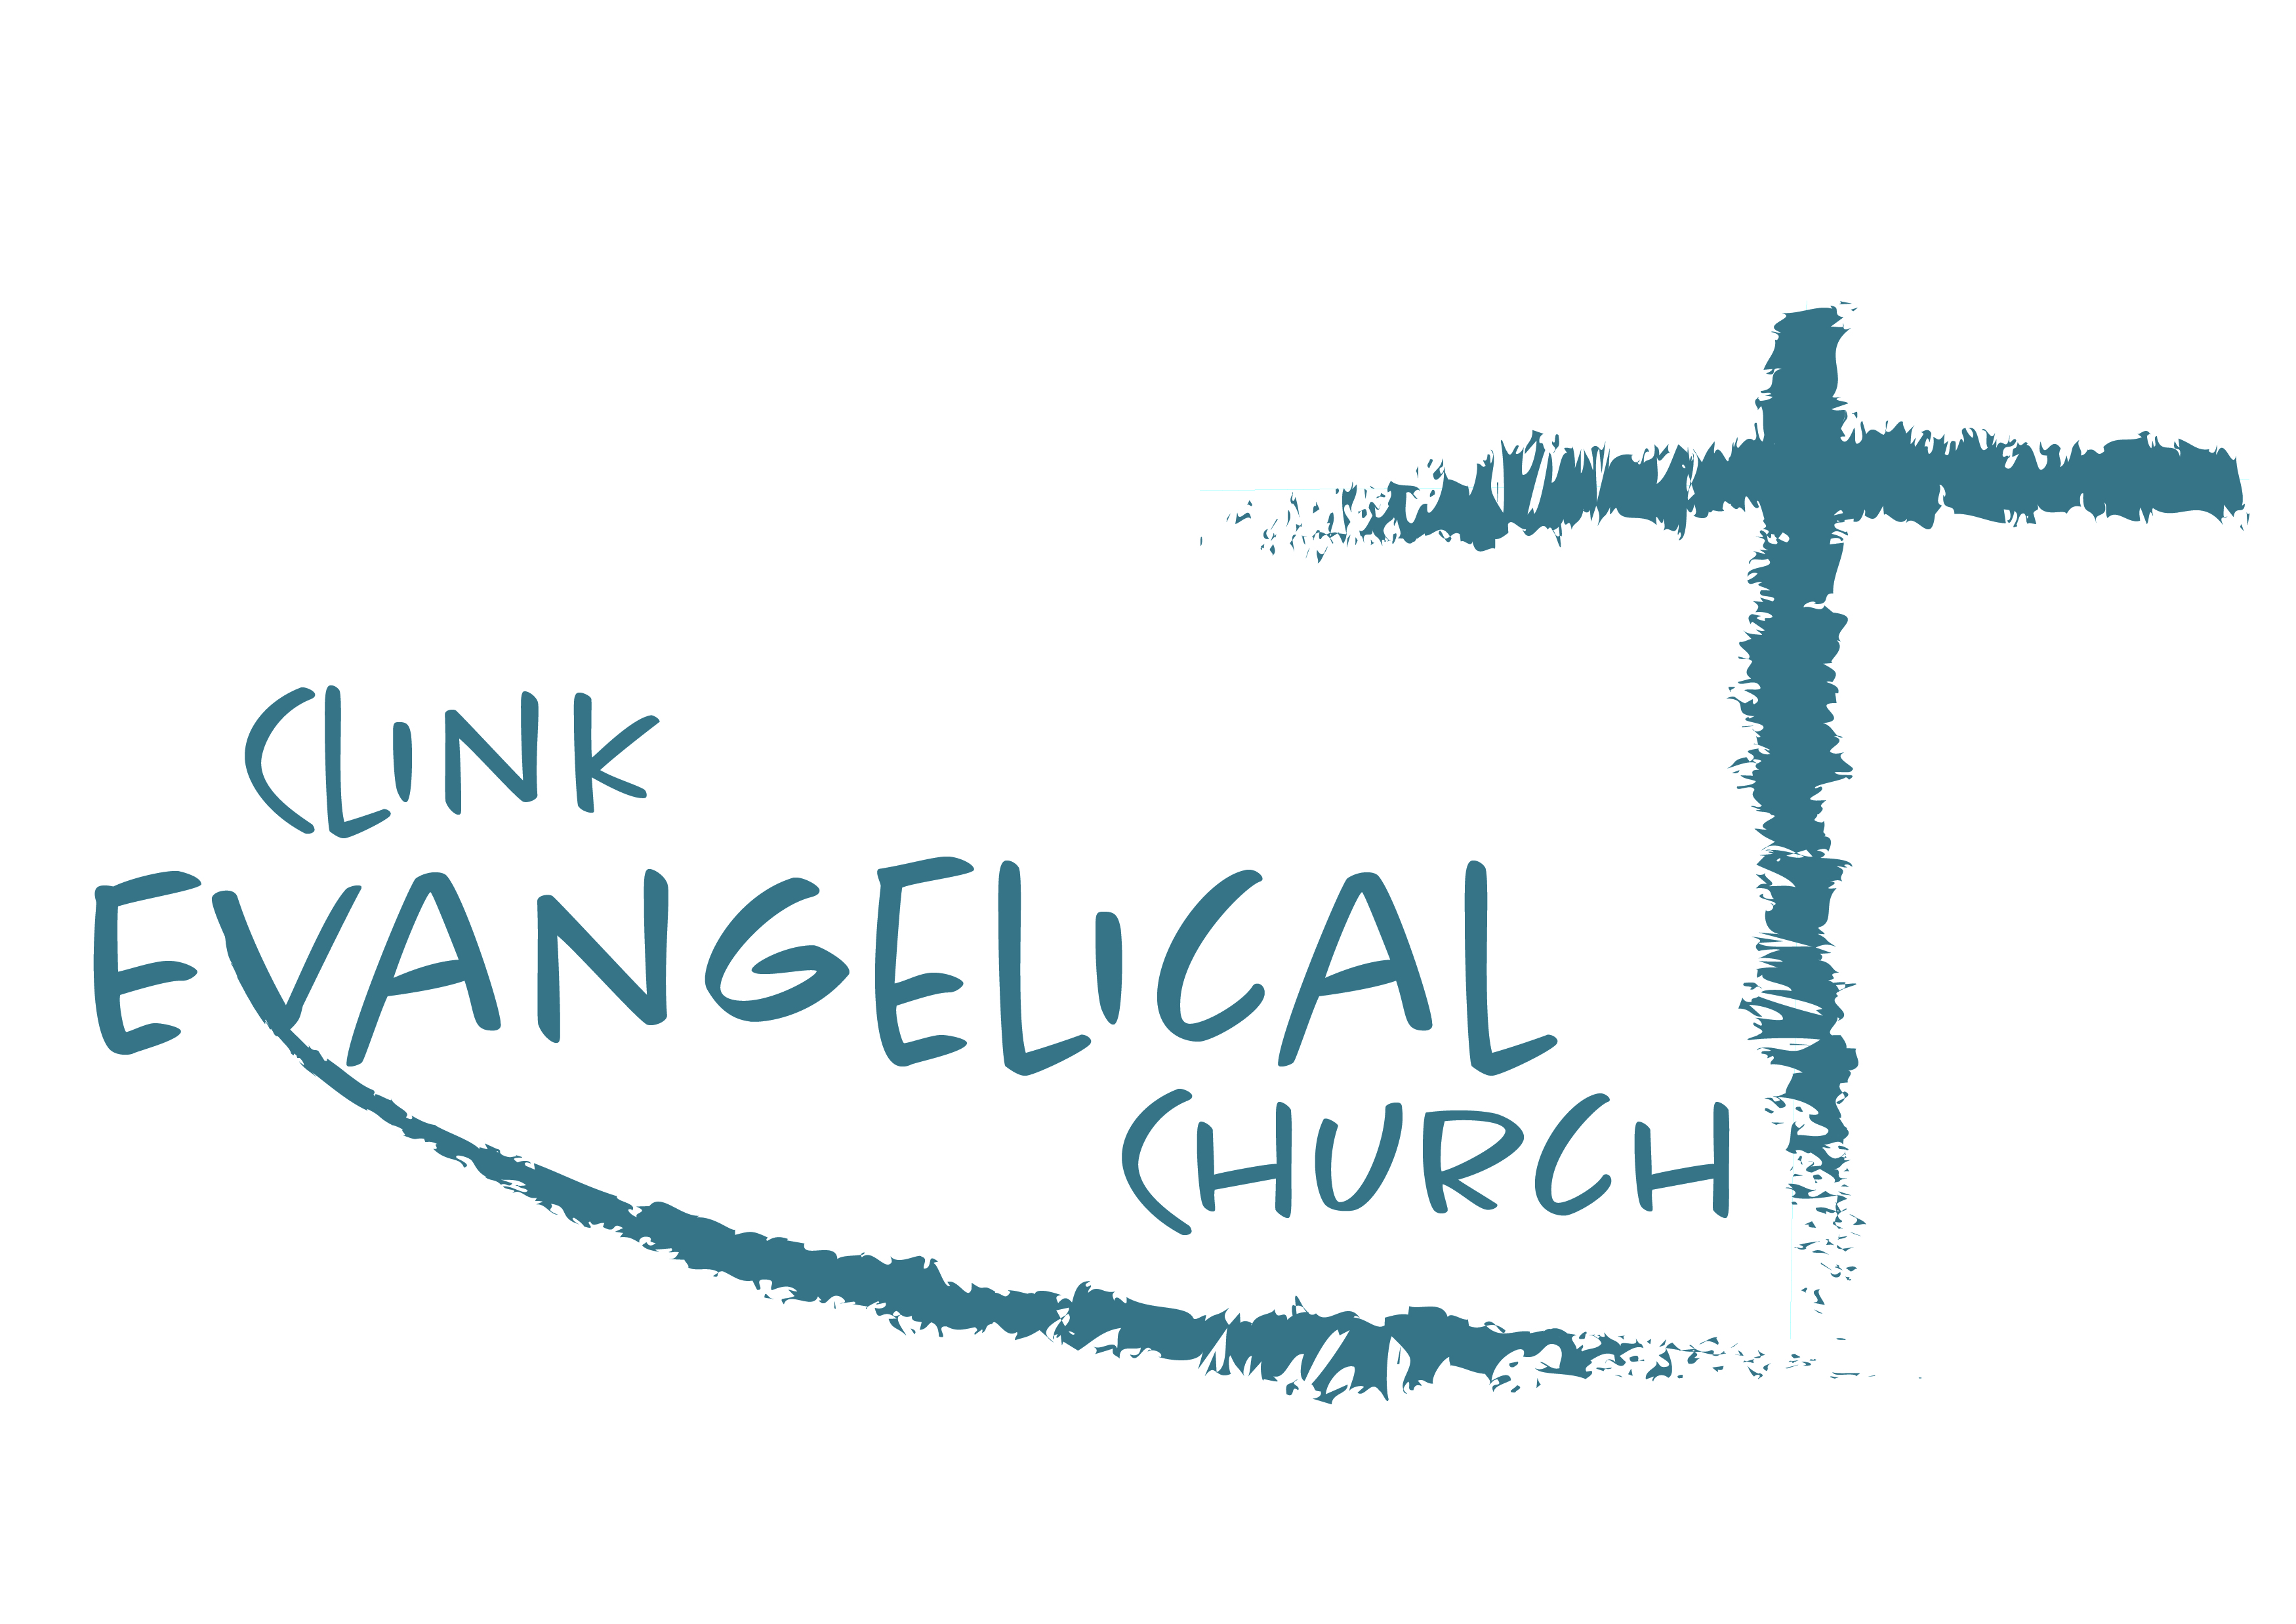 Clink Evangelical Church